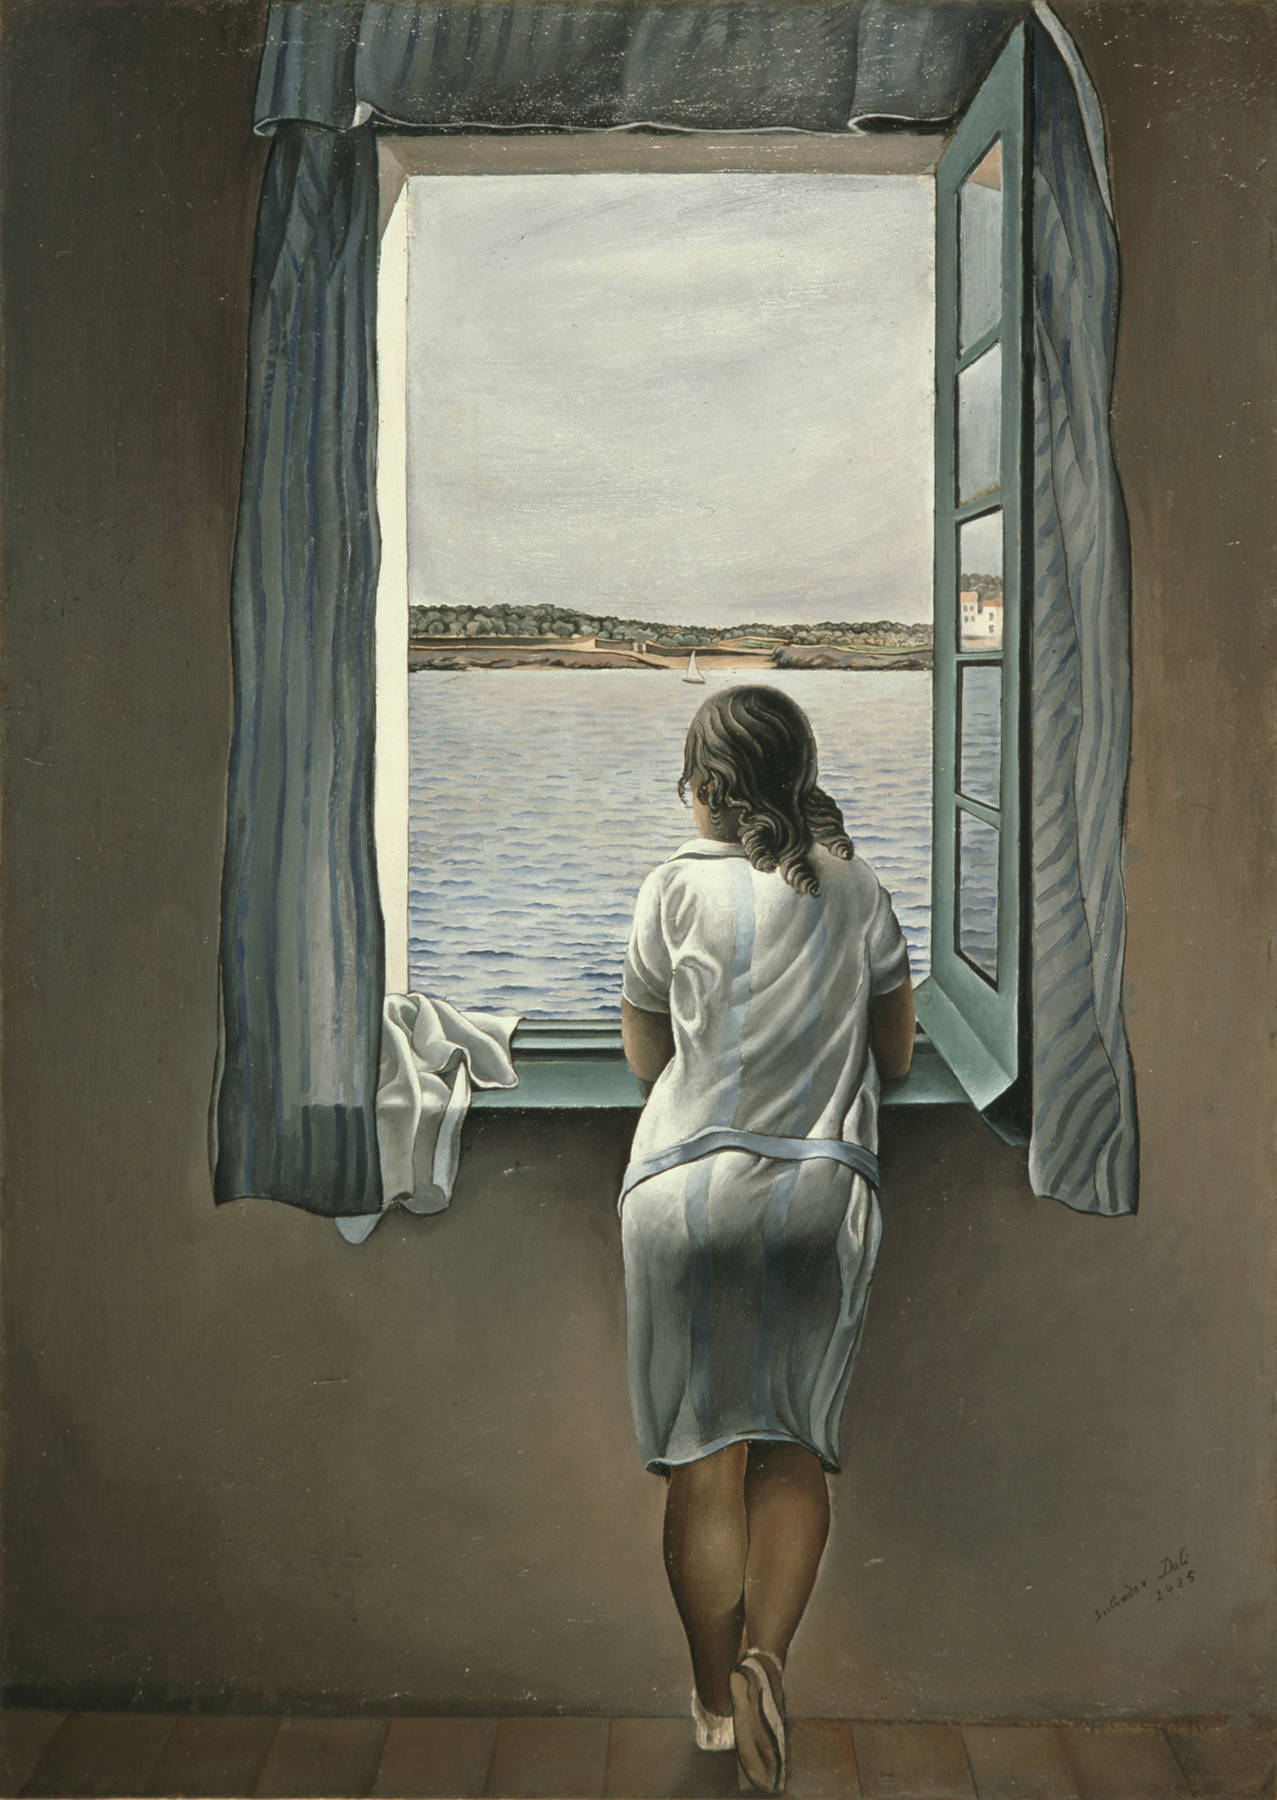 Frau am Fenster von Figueres by Salvador Dalí - 1926 - - Private SammlungnamePrivate Sammlung